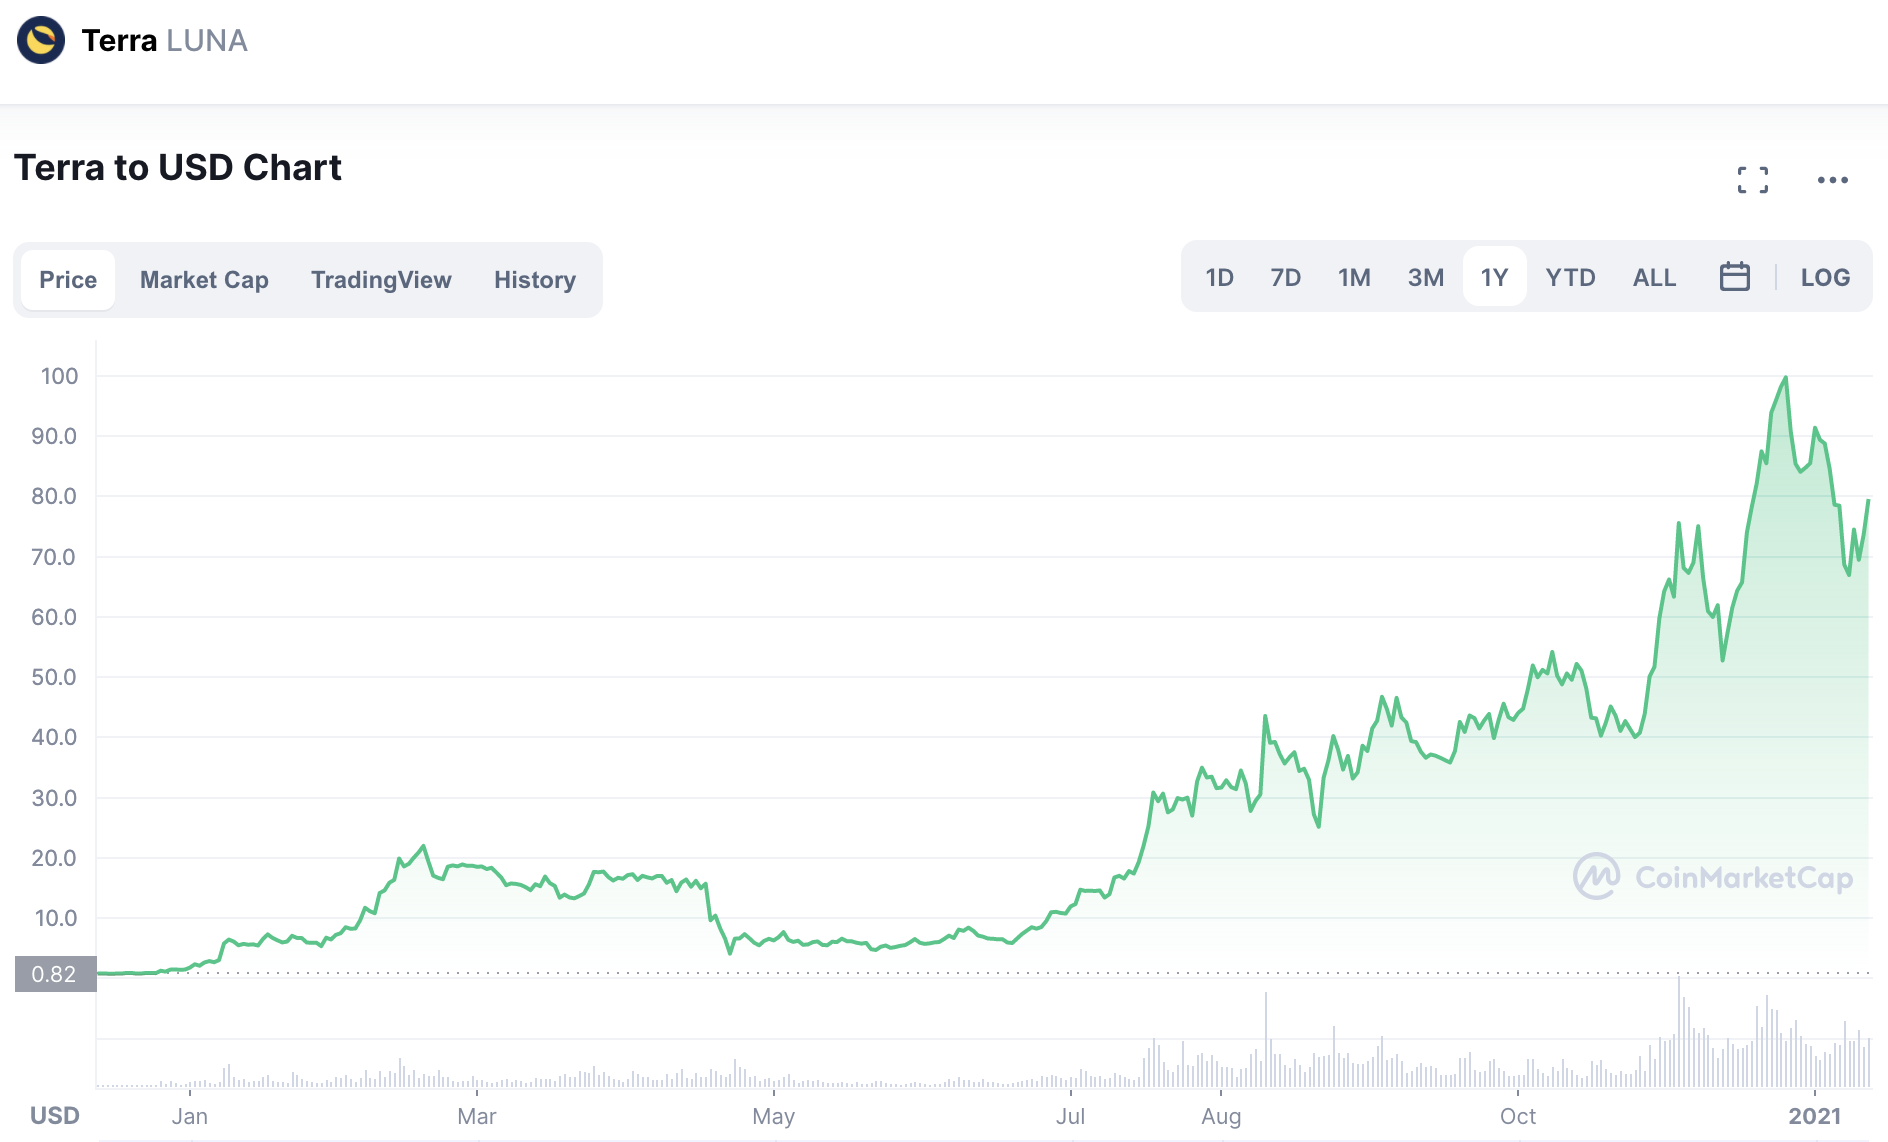 Chart: Tether (LUNA-USD) 1 year price return